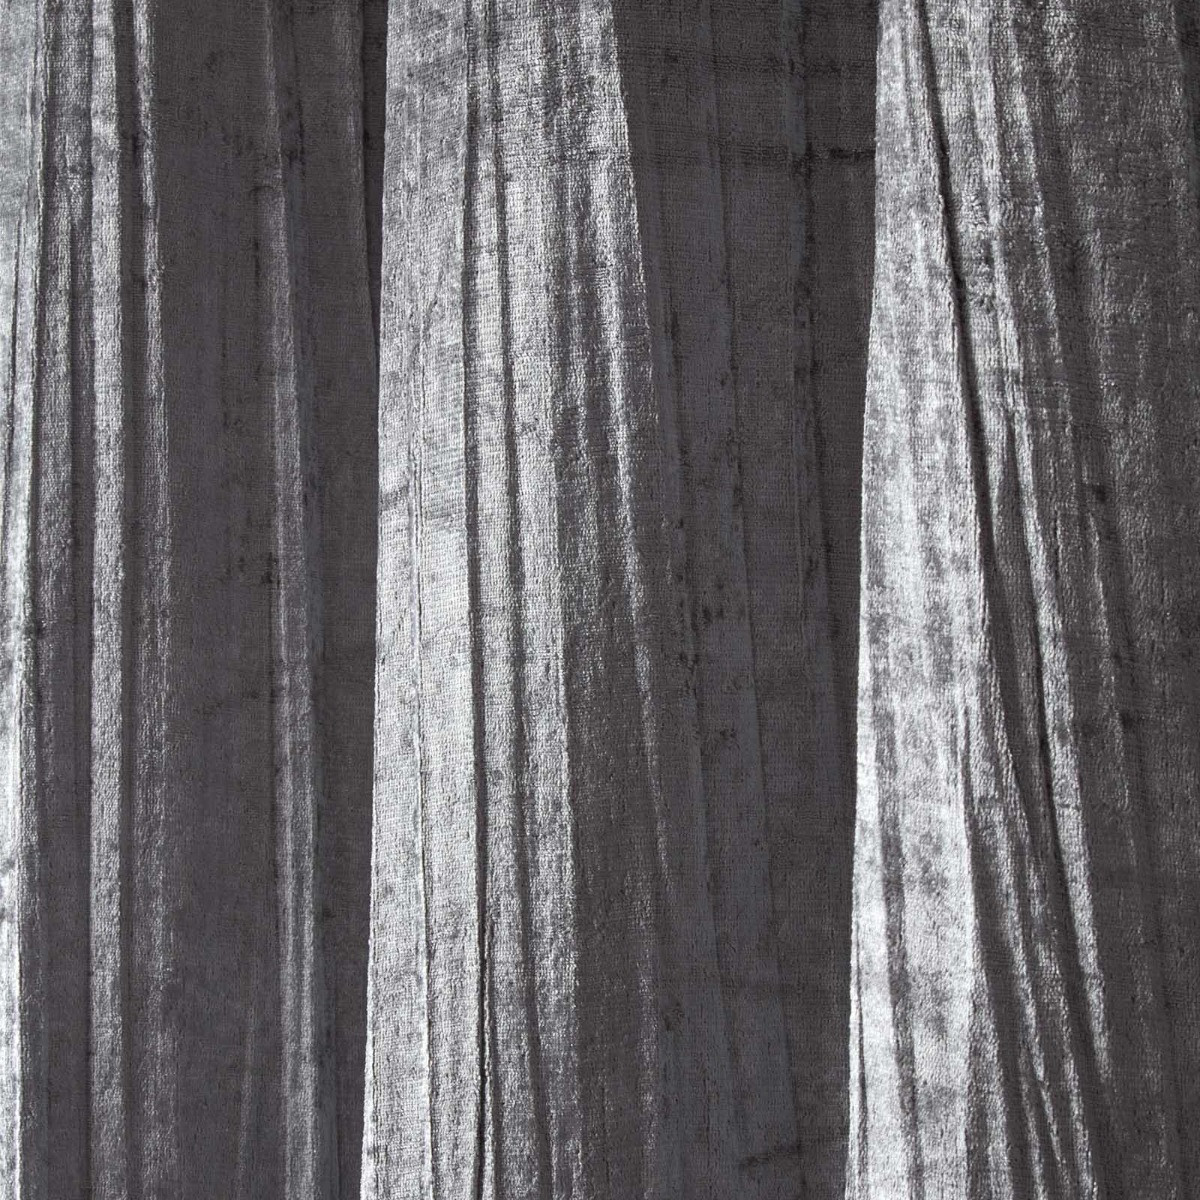 Sienna Home Valencia Crinkle Crushed Velvet Eyelet Curtains - Silver Grey>